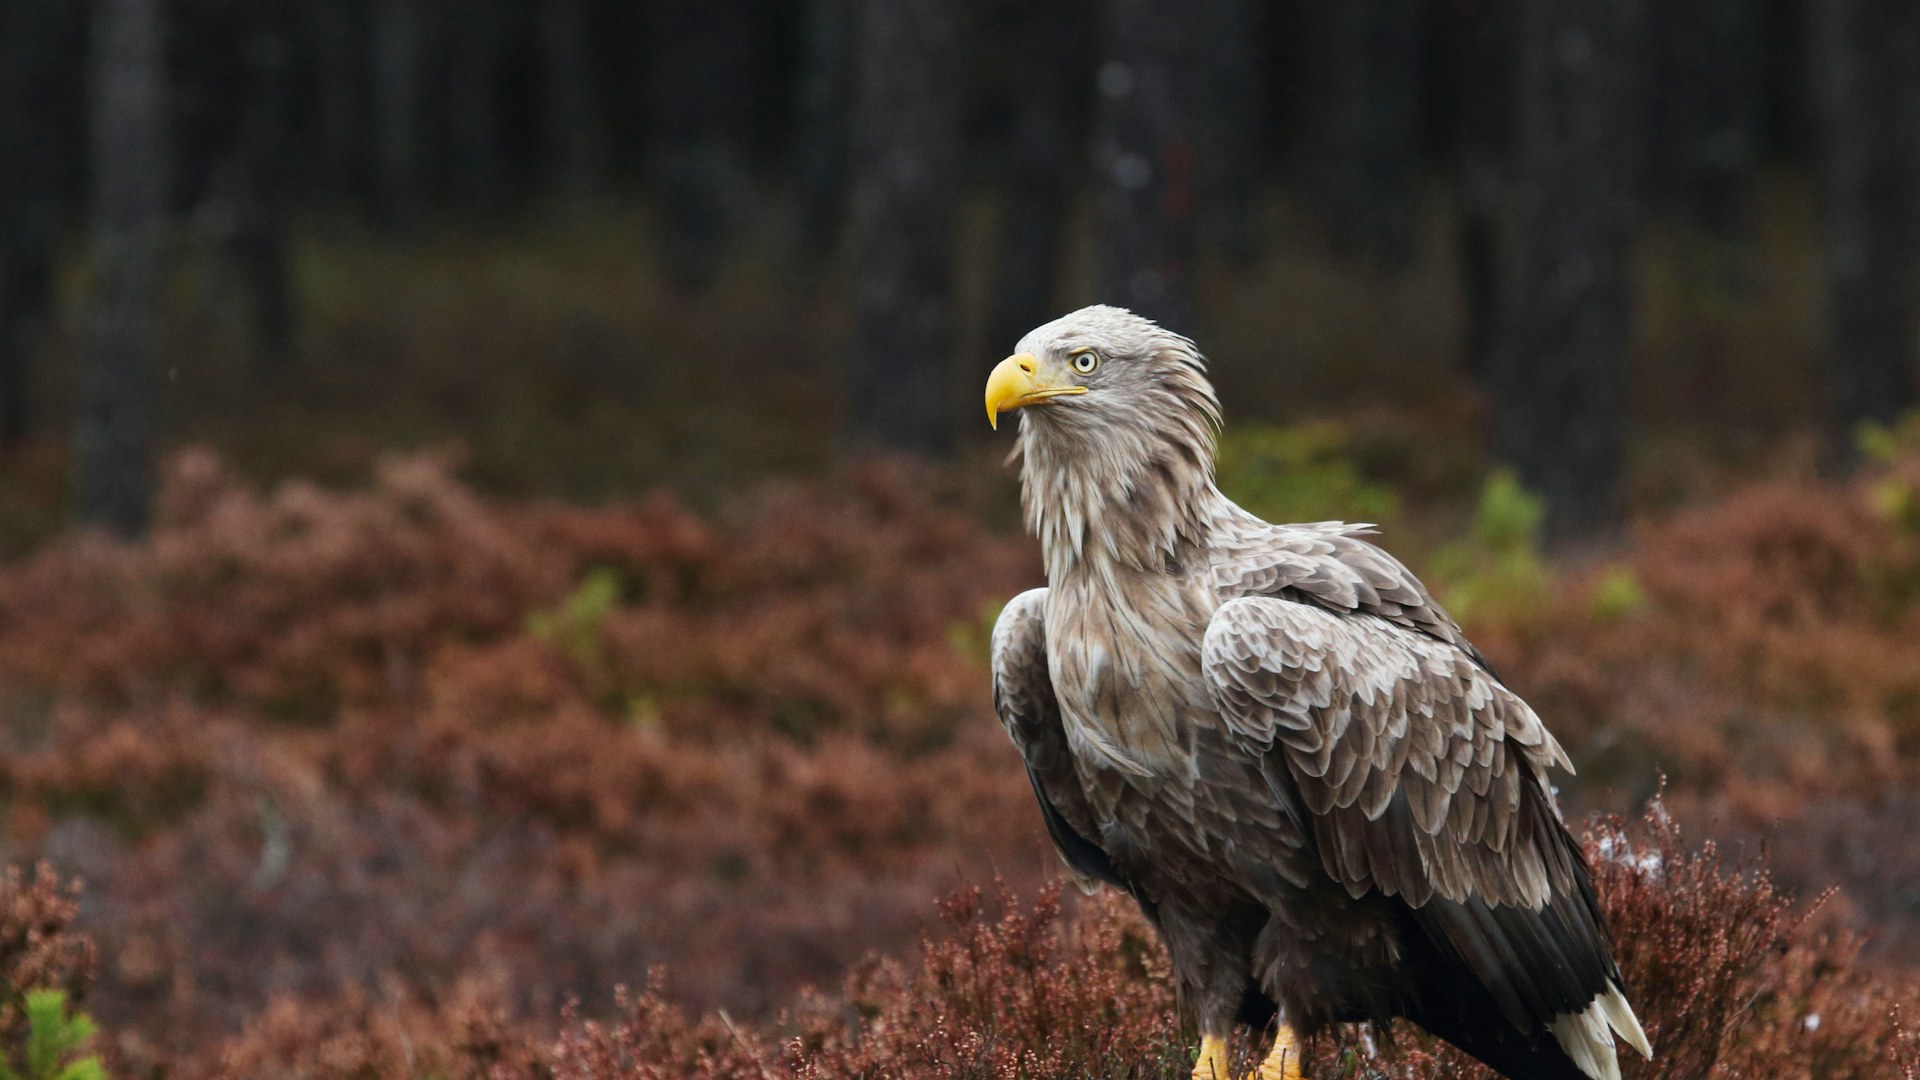 White tailed eagle standing in heather, Estonia